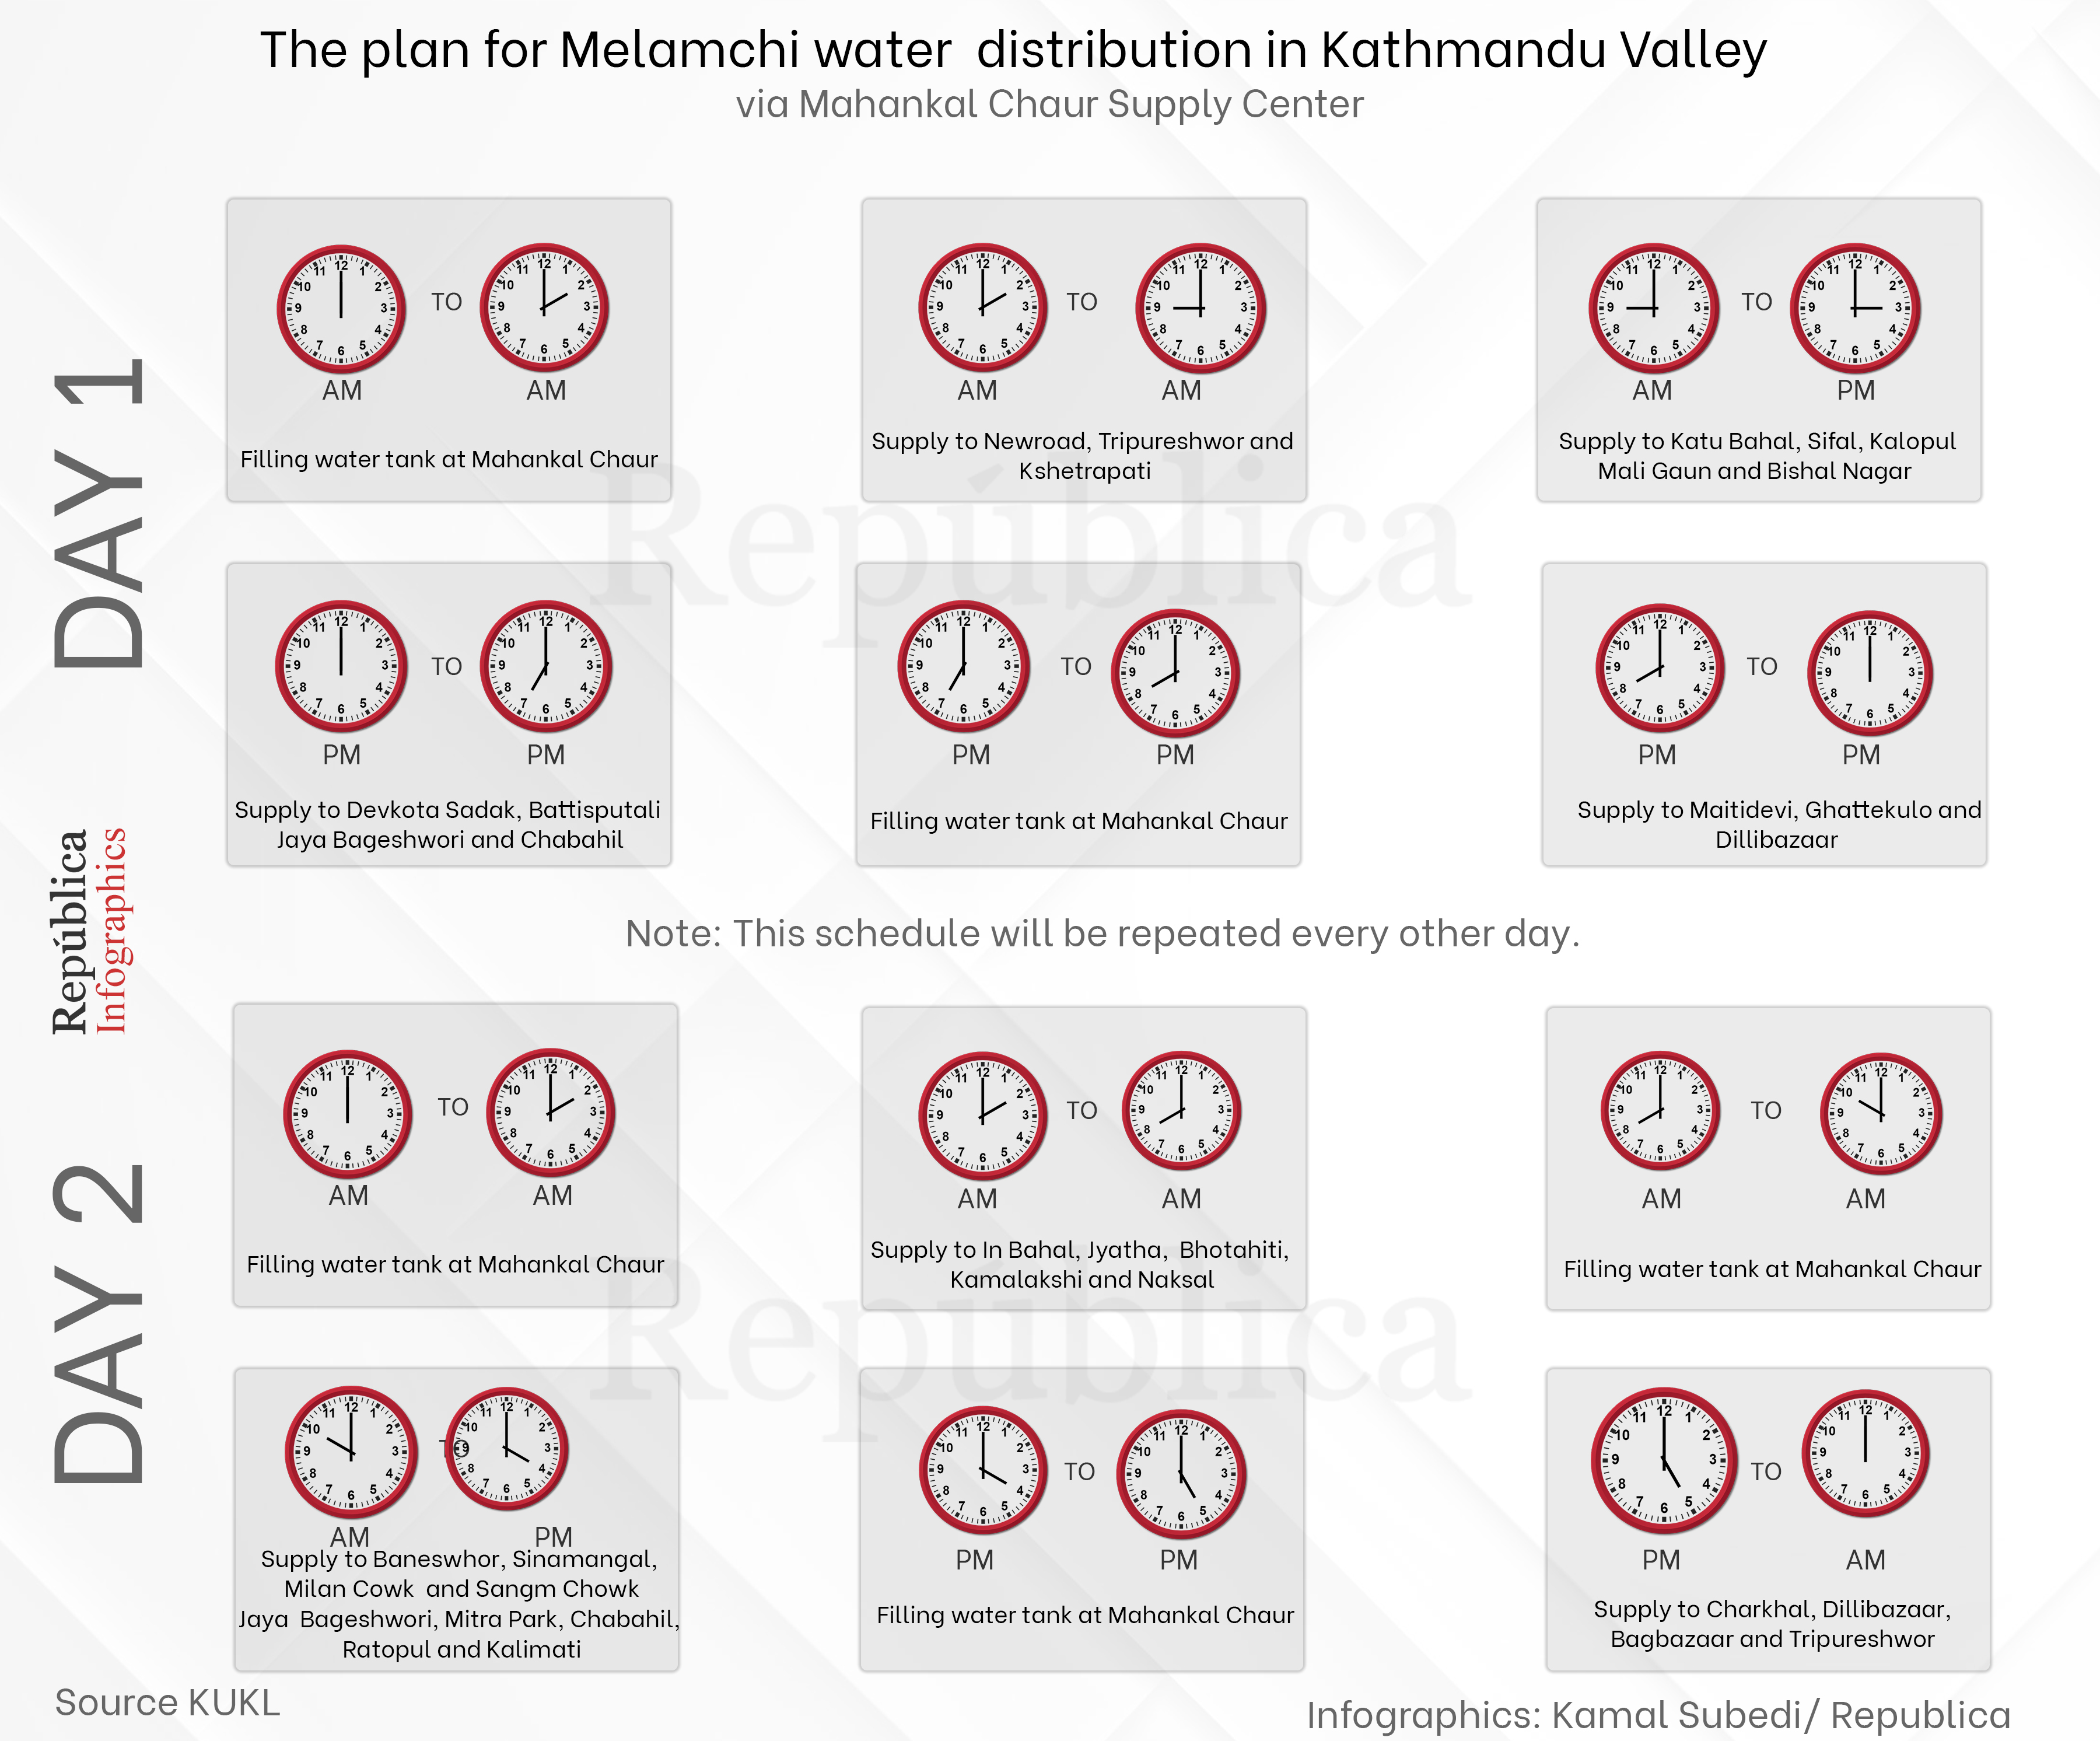 Melamchi water  distribution plan for Kathmandu Valley from Mahankar Chaur Supply Center